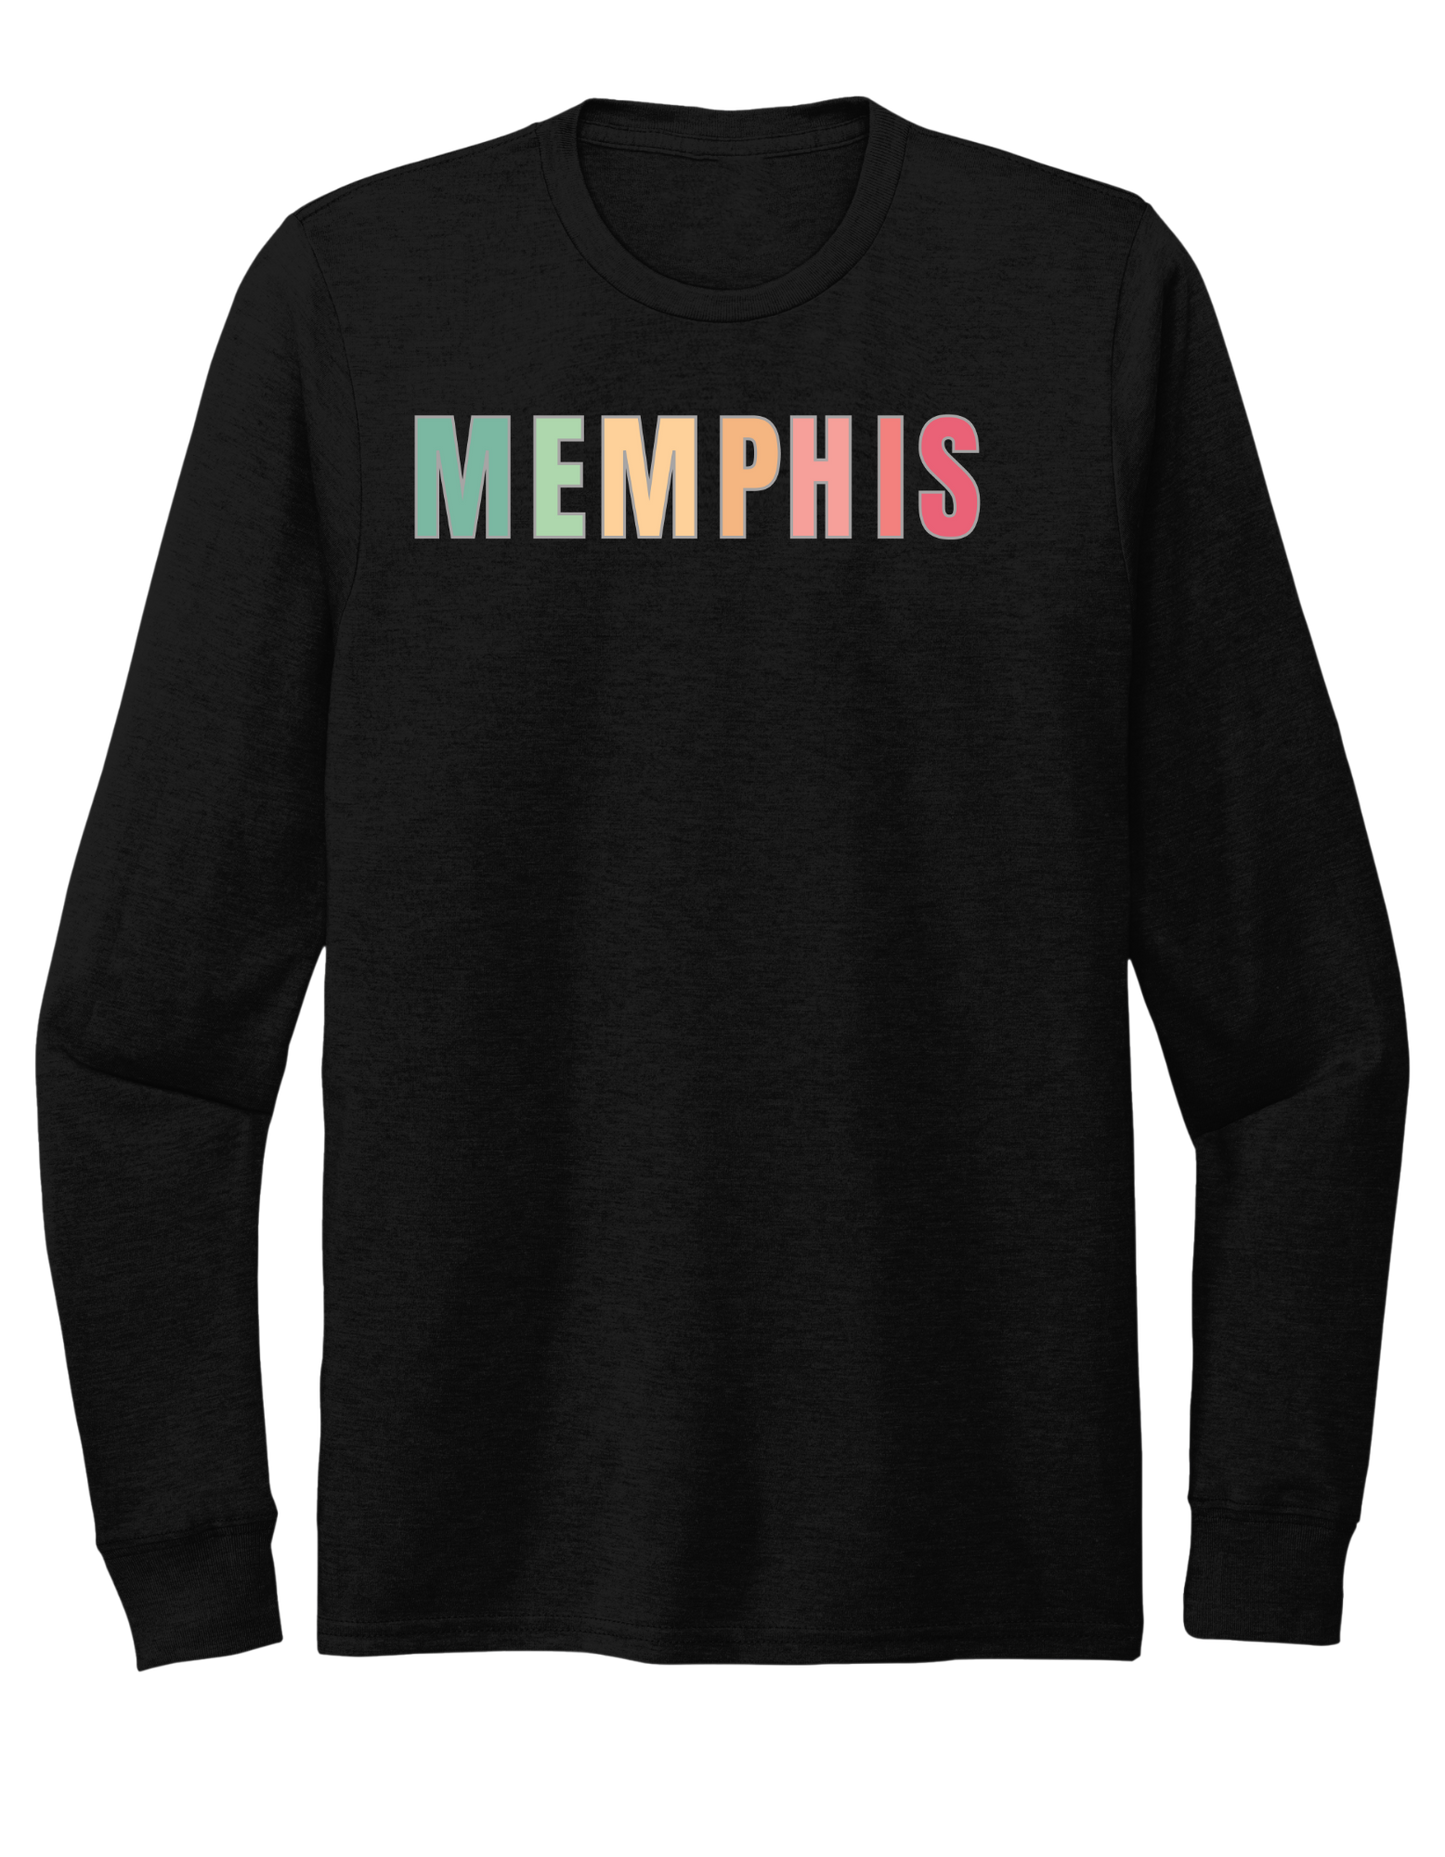 All Memphis Long Sleeve - Black